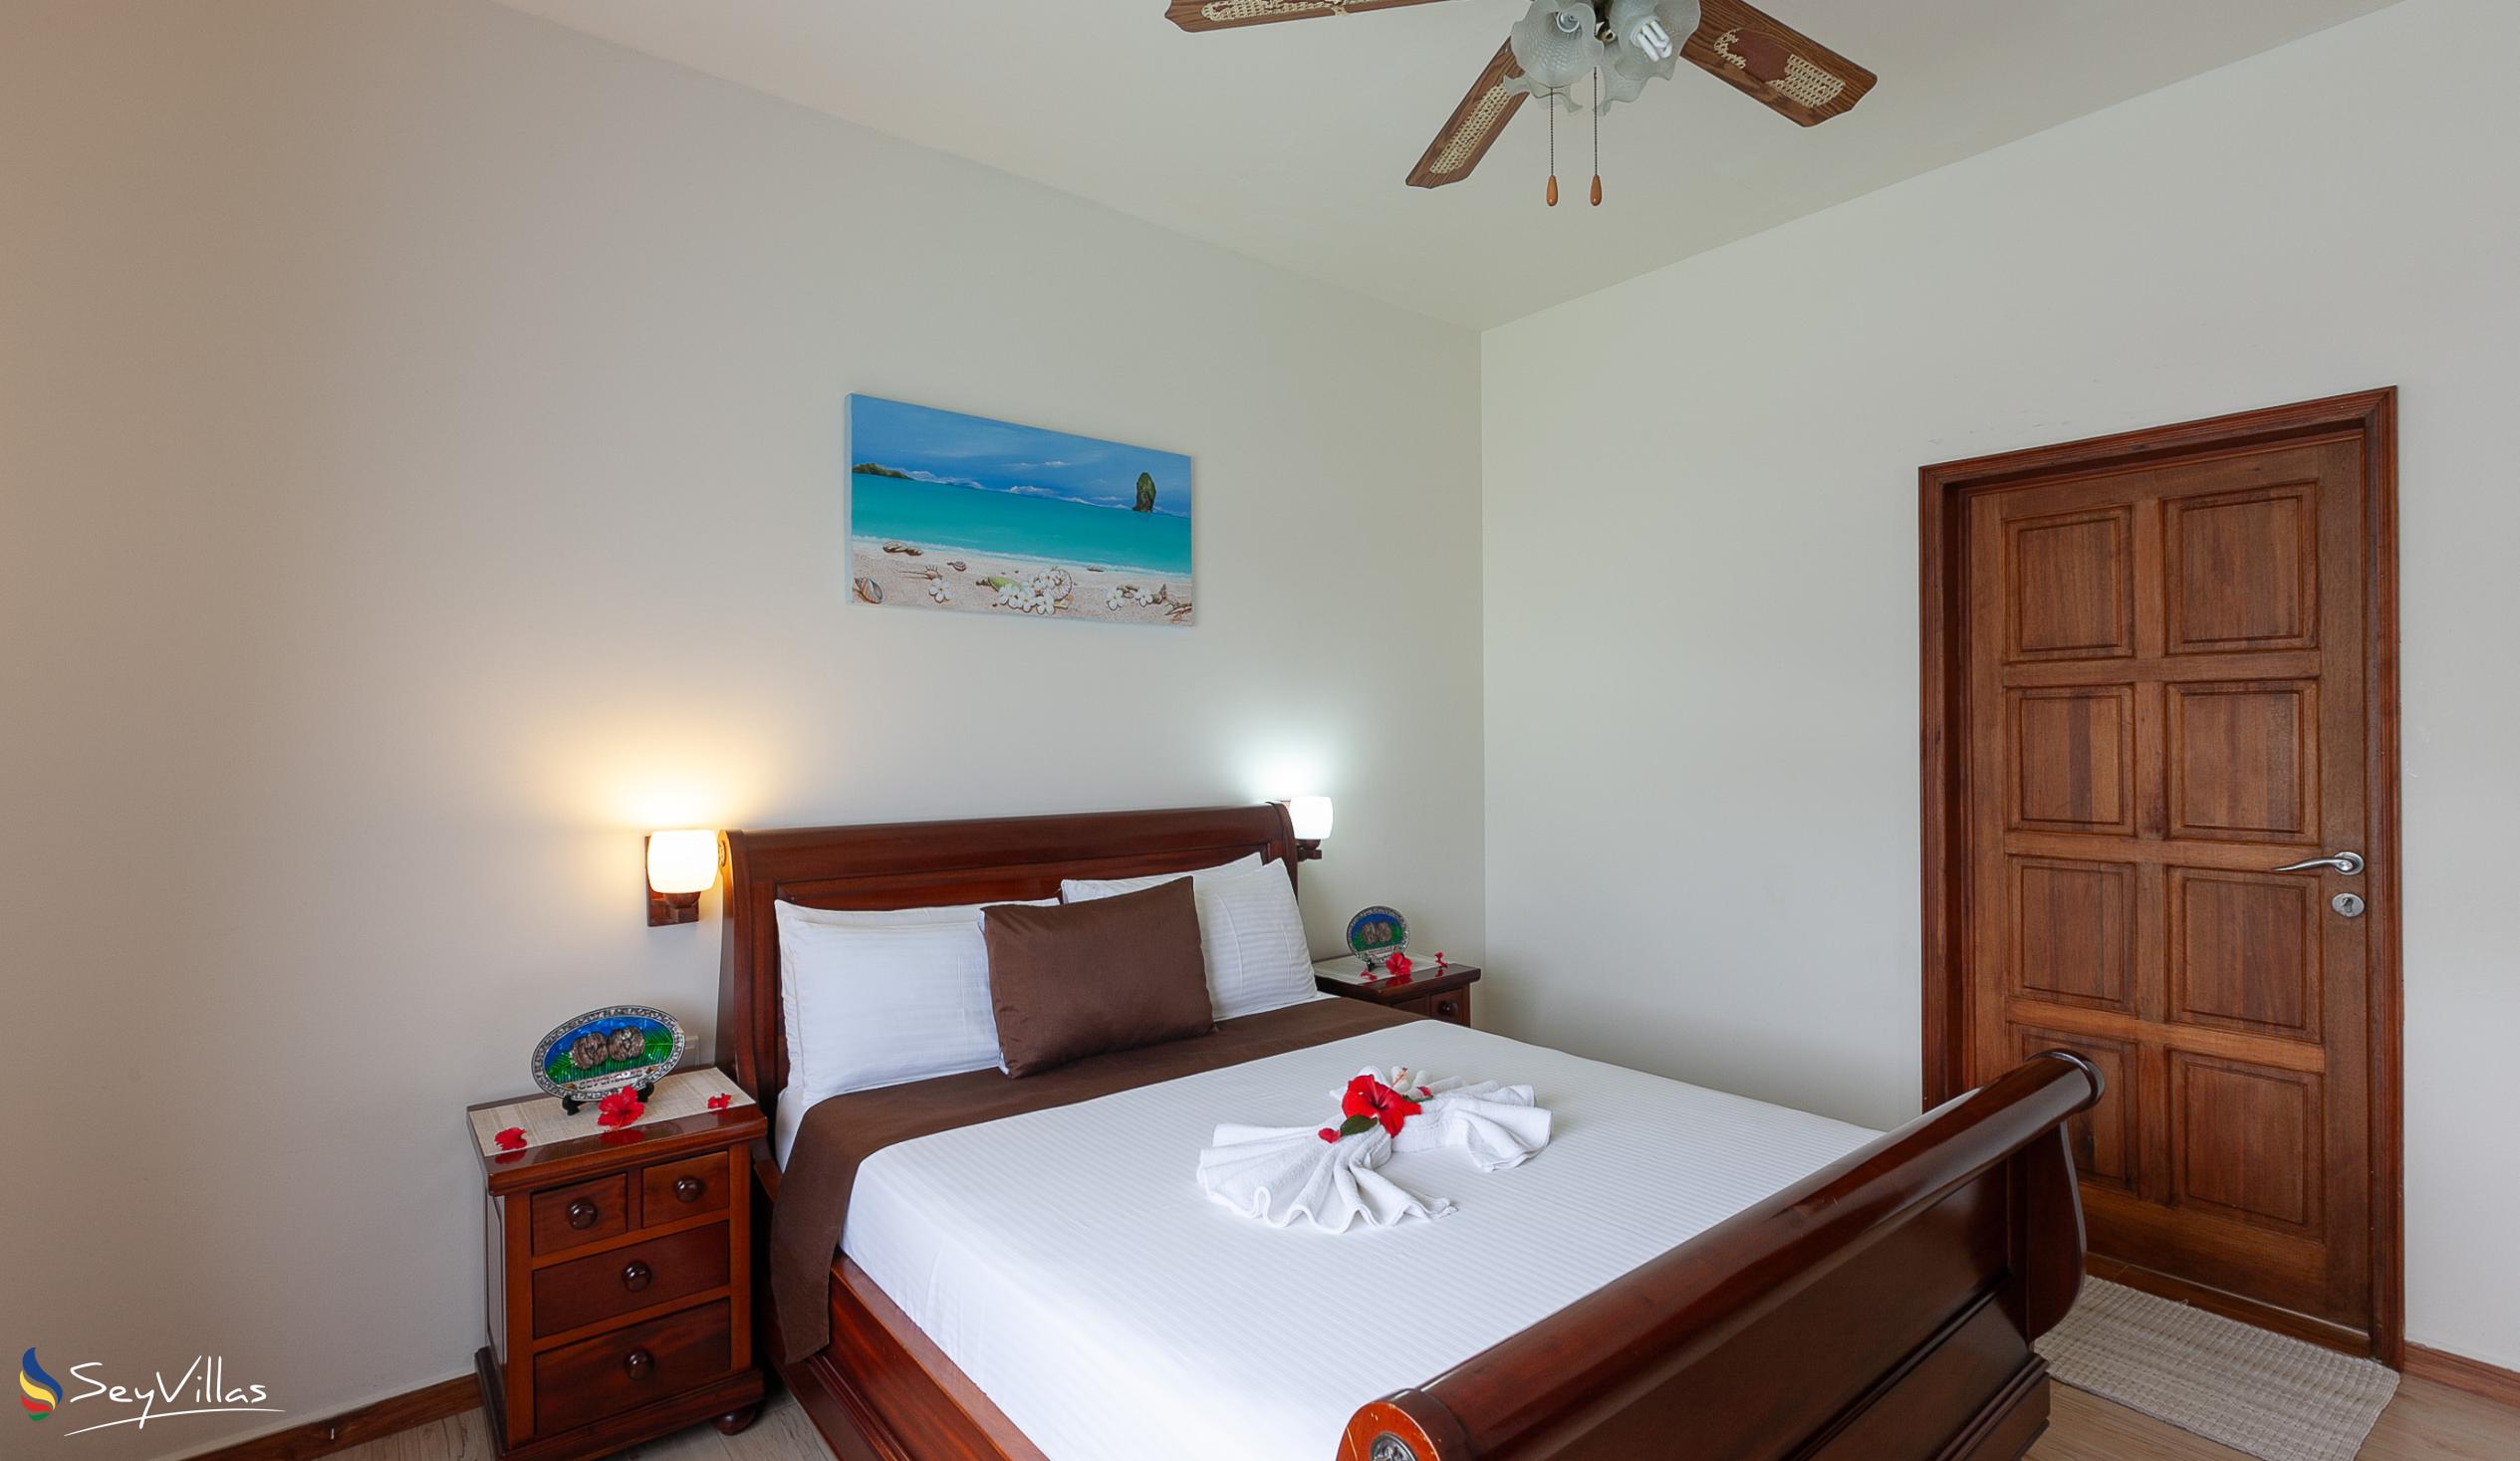 Photo 71: Seashell Beach Villa - 2-Bedroom Apartment - Praslin (Seychelles)